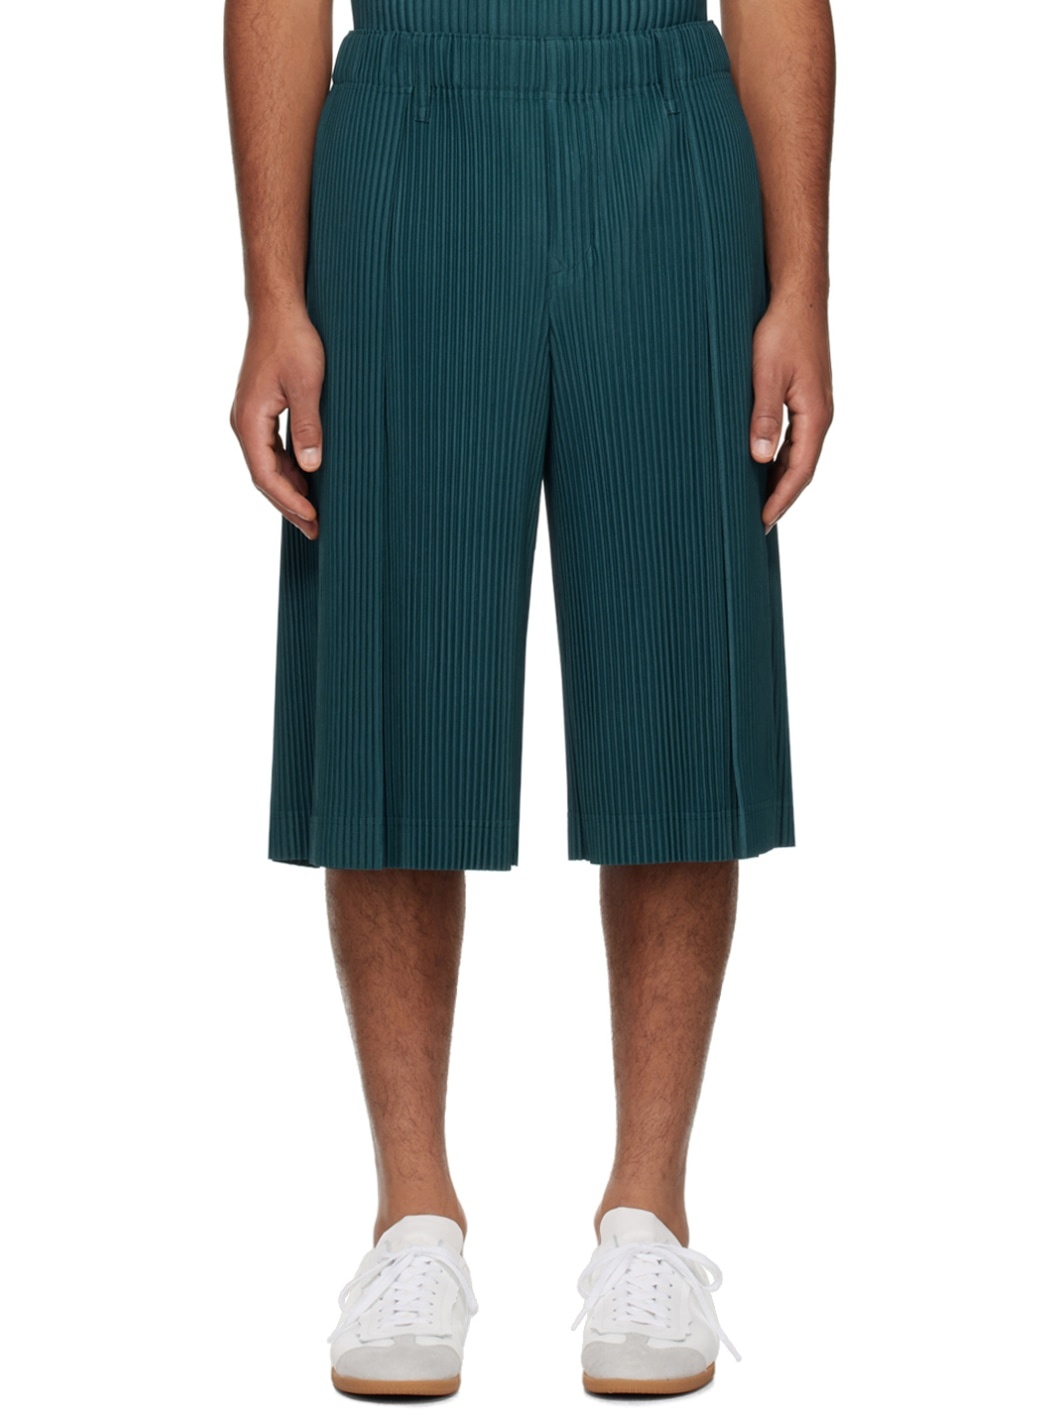 Green Tailored Pleats 2 Shorts - 1